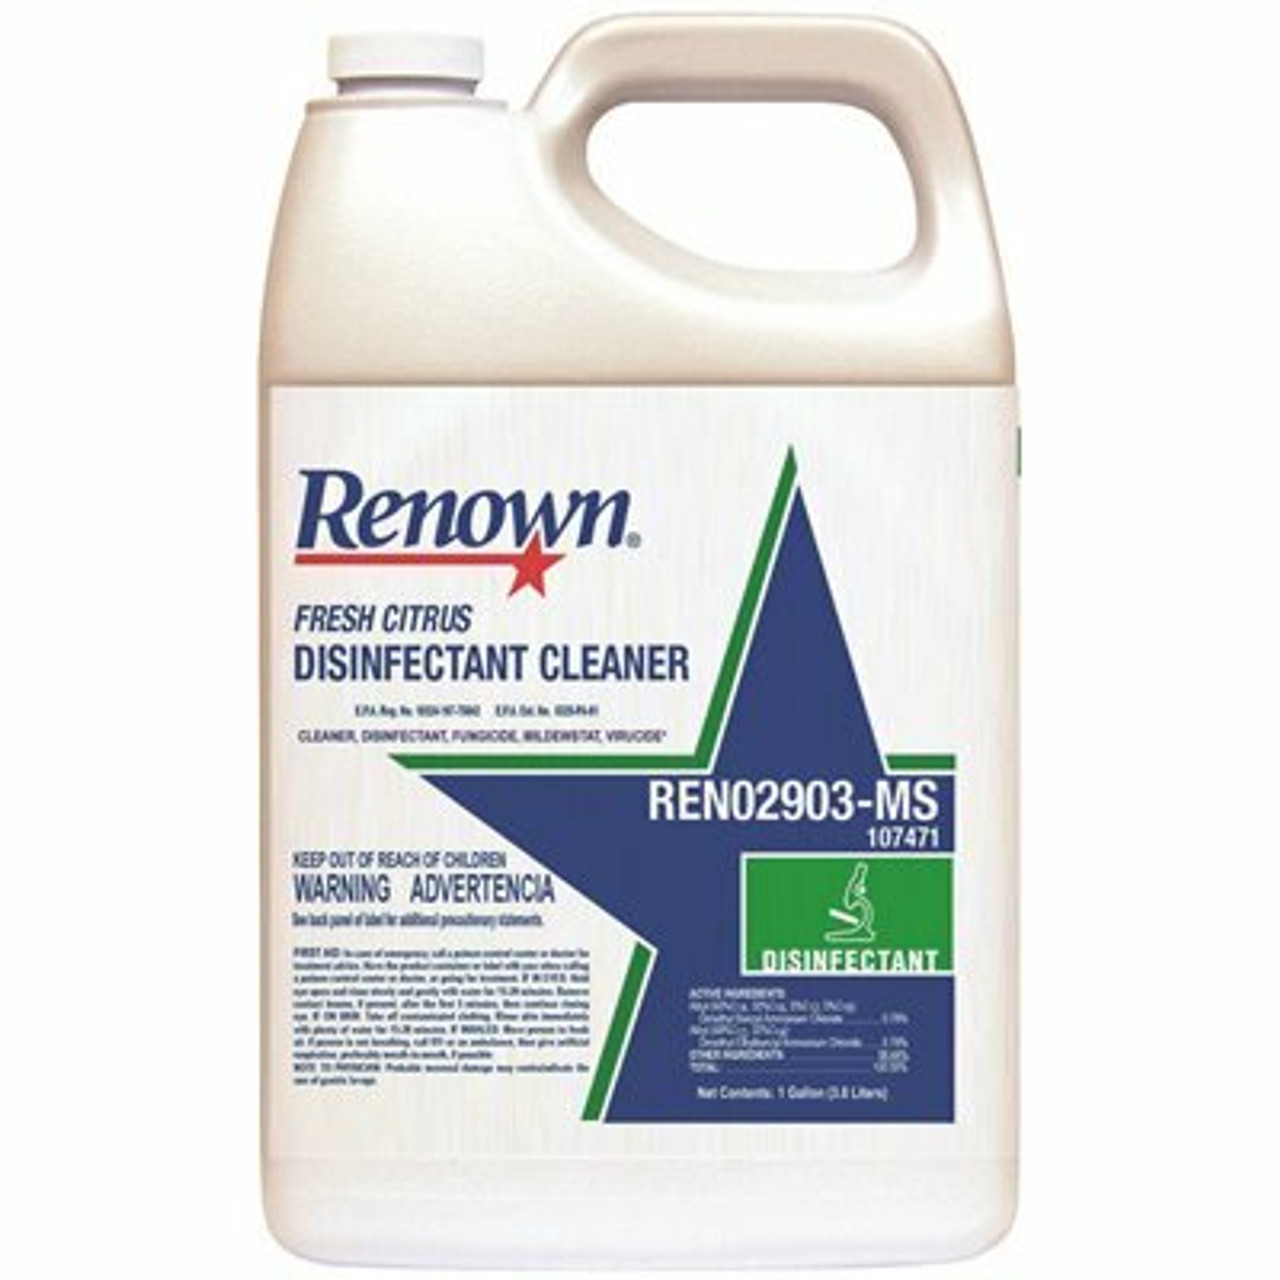 Renown 128 Oz. Fresh Citrus Disinfectant Cleaner